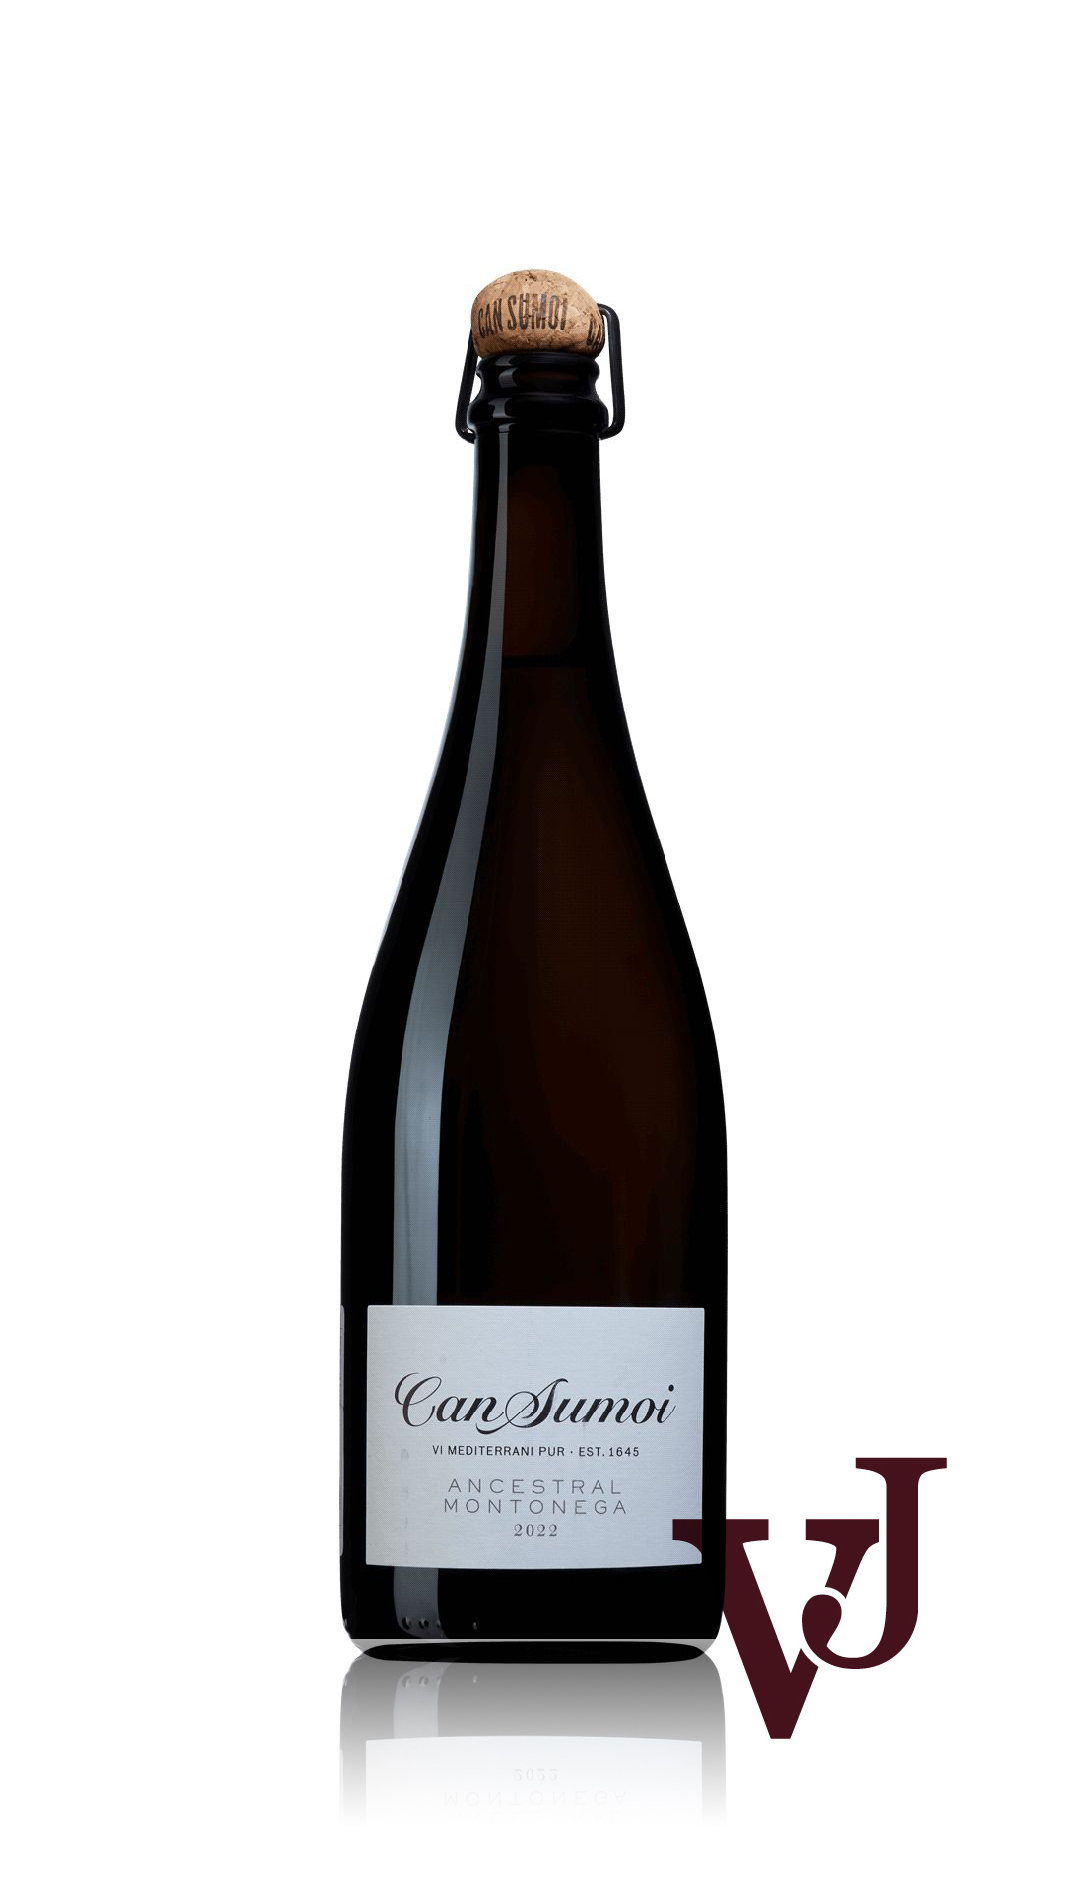 Mousserande Vin - Can Sumoi Ancestral Montonega 2022 artikel nummer 9334101 från producenten Can Sumoi från området Spanien